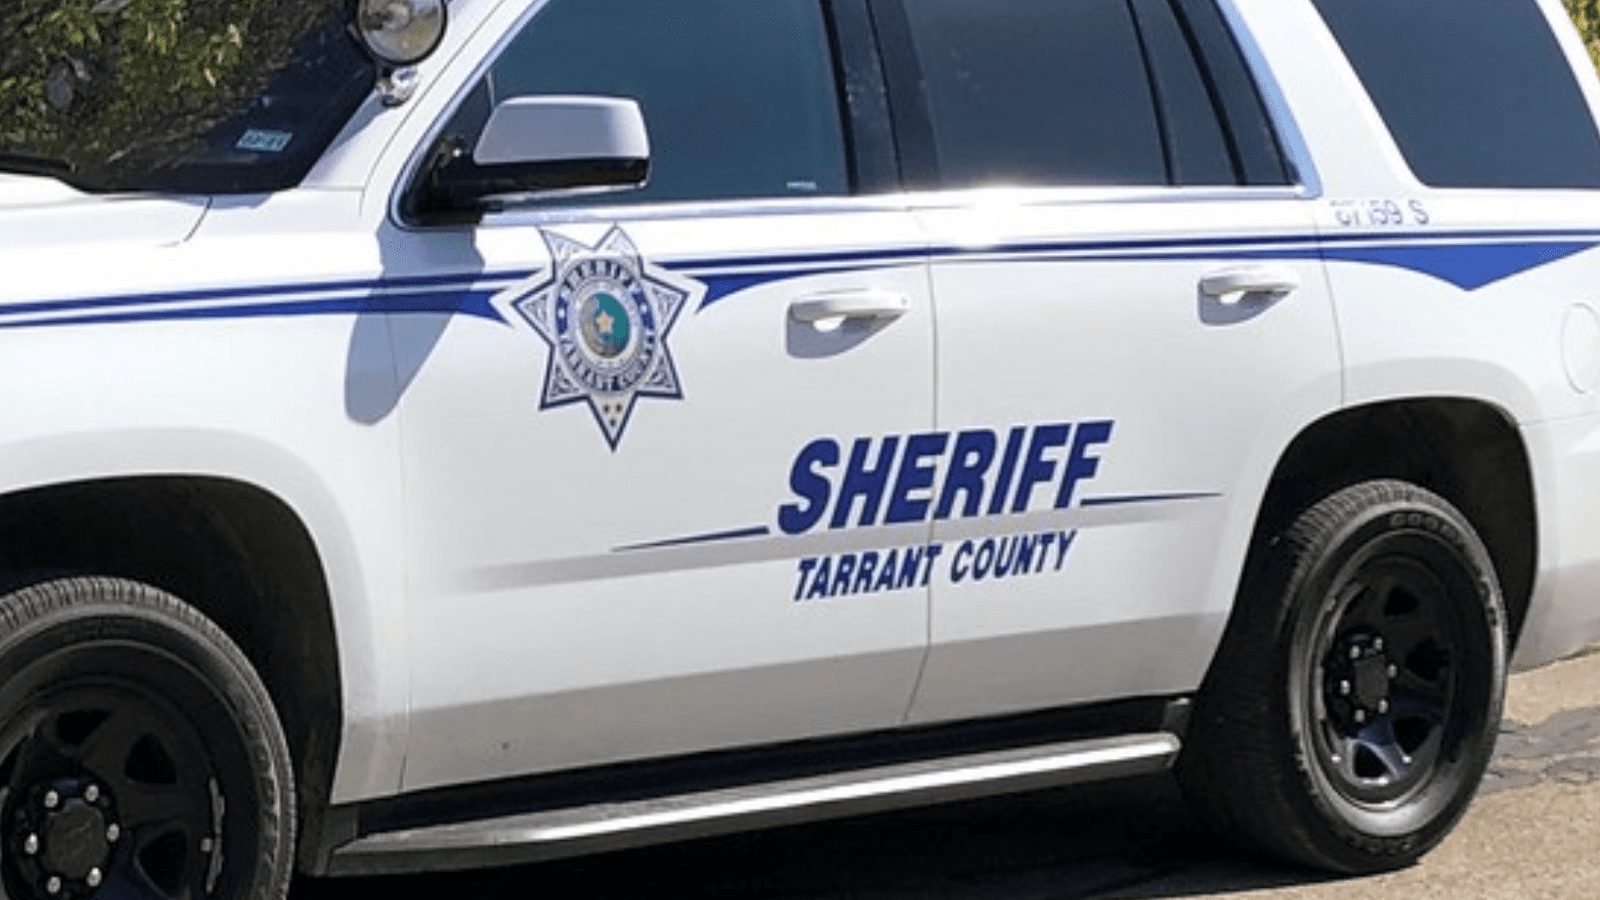 Tarrant County Sheriff Unit